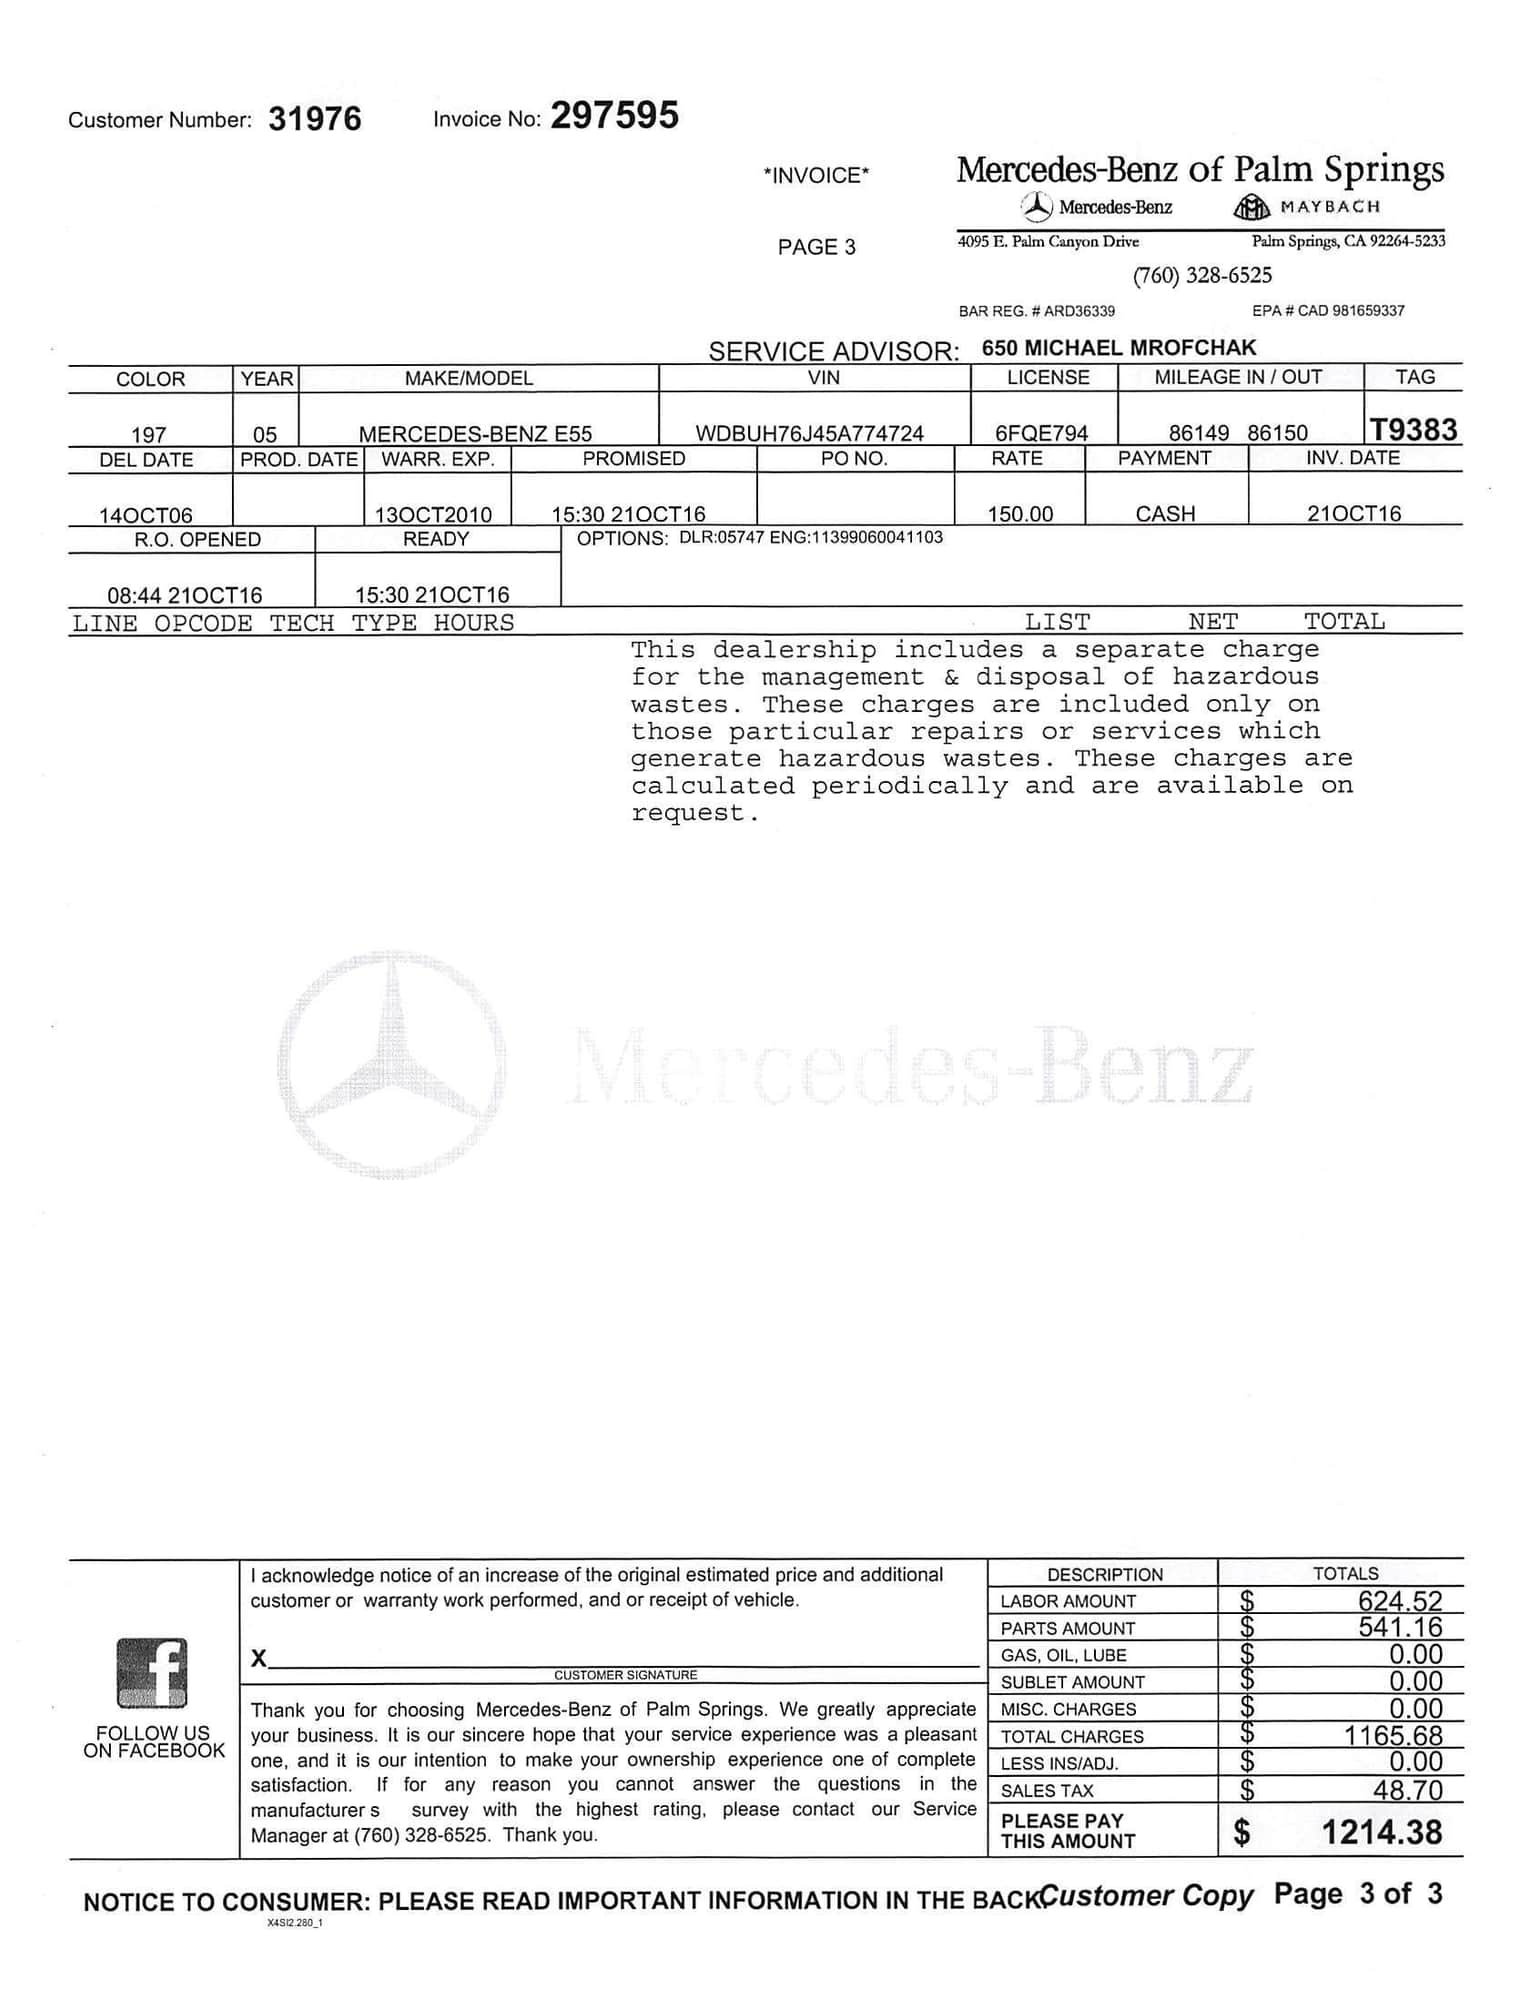 2005 Mercedes-Benz E55 AMG - 2005 Mercedes Benz E55 AMG Wagon - Used - VIN WDBUH76J45A774724 - 8 cyl - 2WD - Automatic - Wagon - Black - Fresno, CA 93730, United States